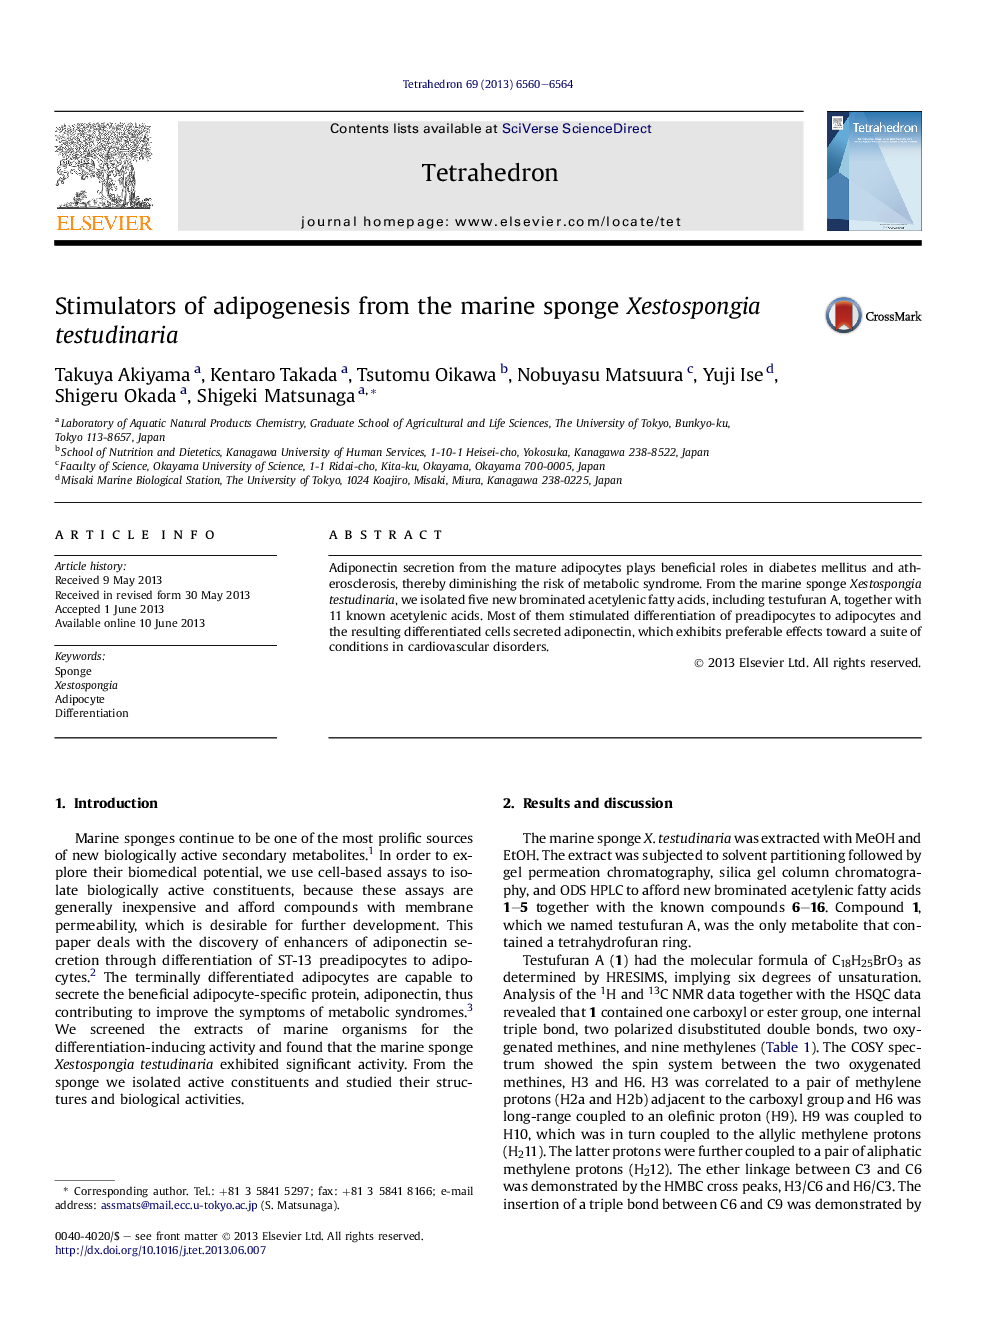 Stimulators of adipogenesis from the marine sponge Xestospongia testudinaria